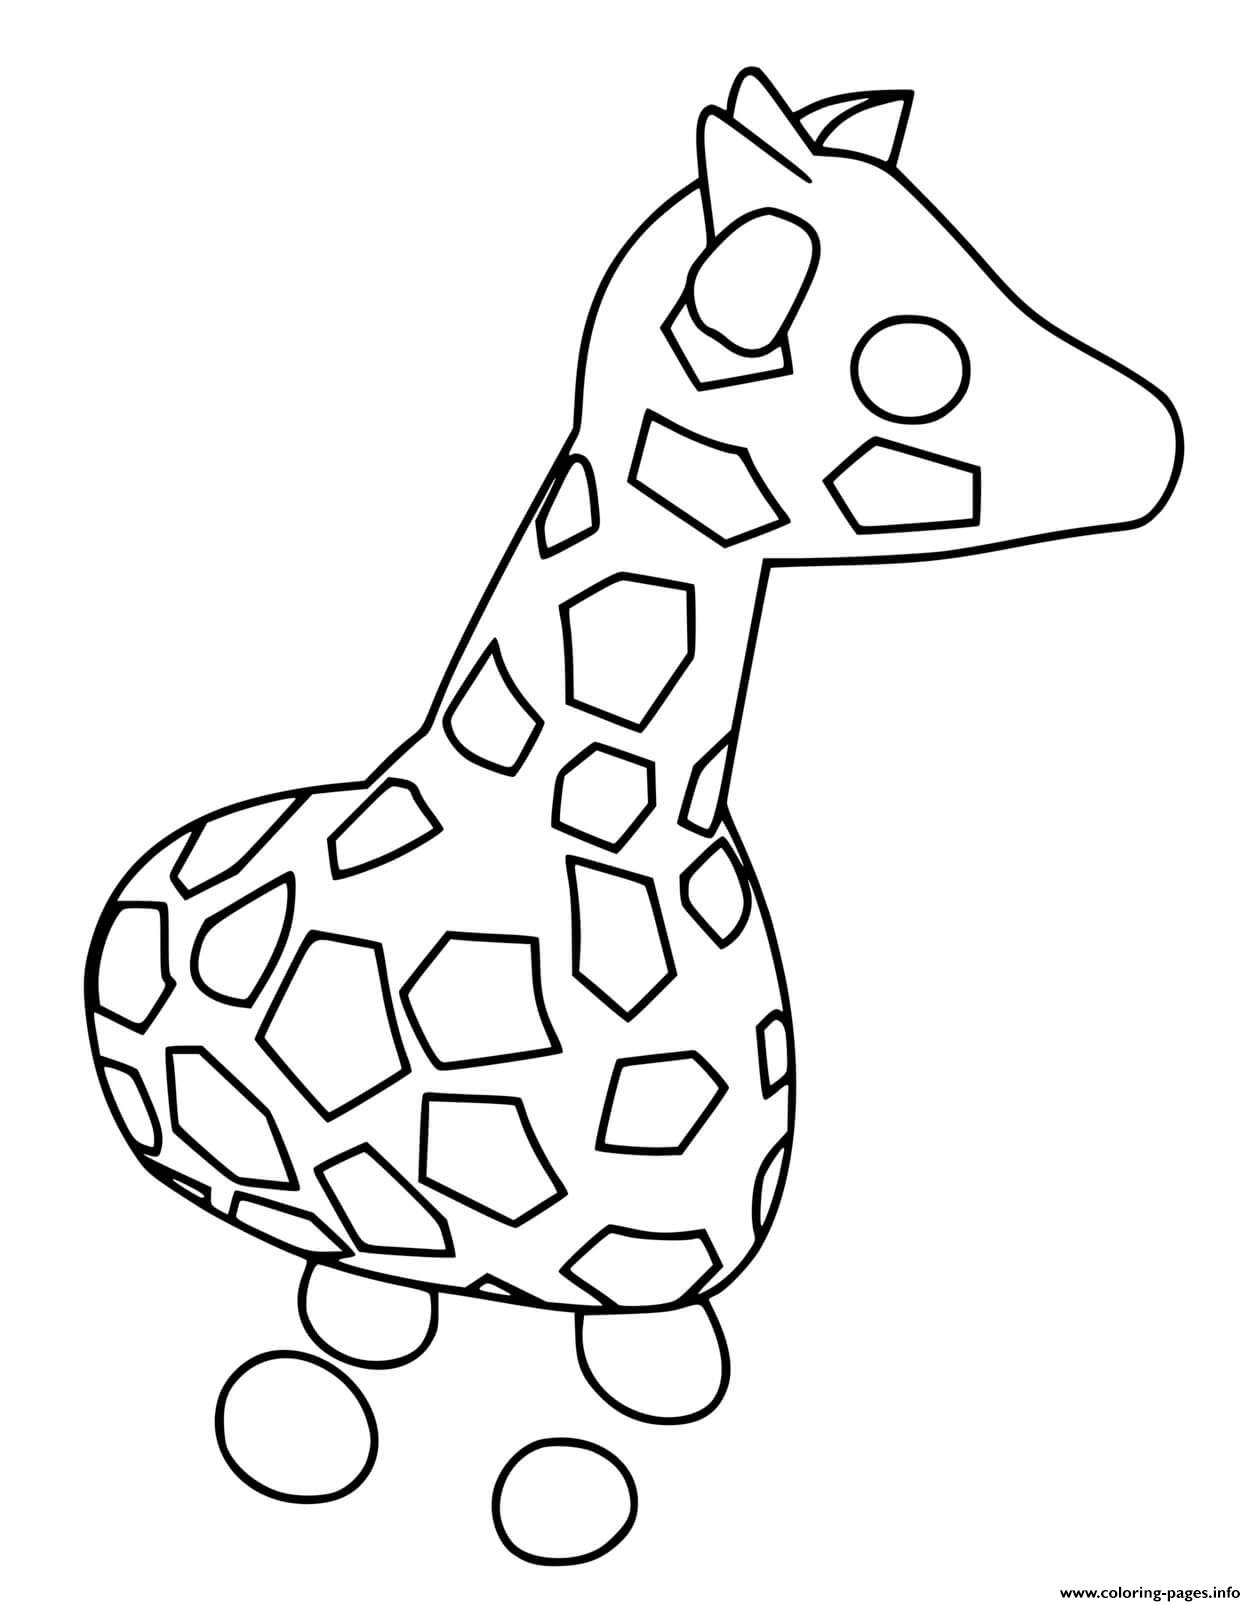 Adopt Me Giraffe Coloring page Printable